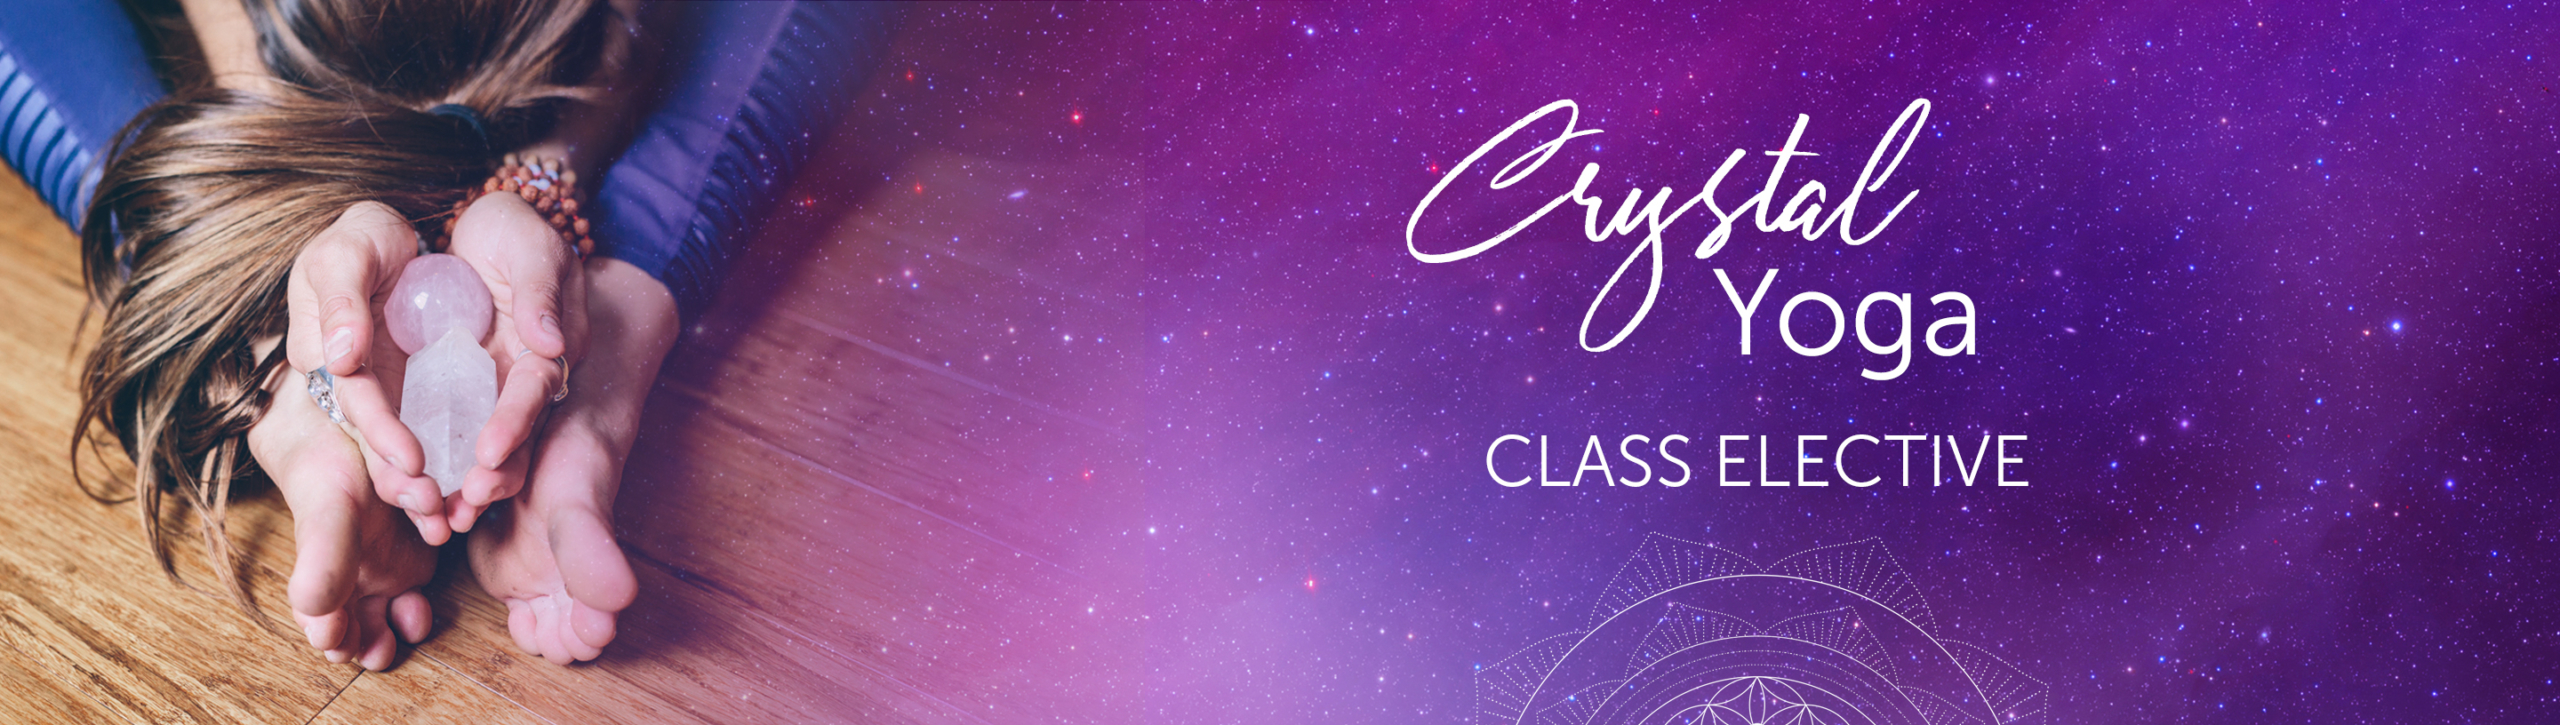 Crystal Yoga Class Elective, Hibiscus Moon Crystal Academy